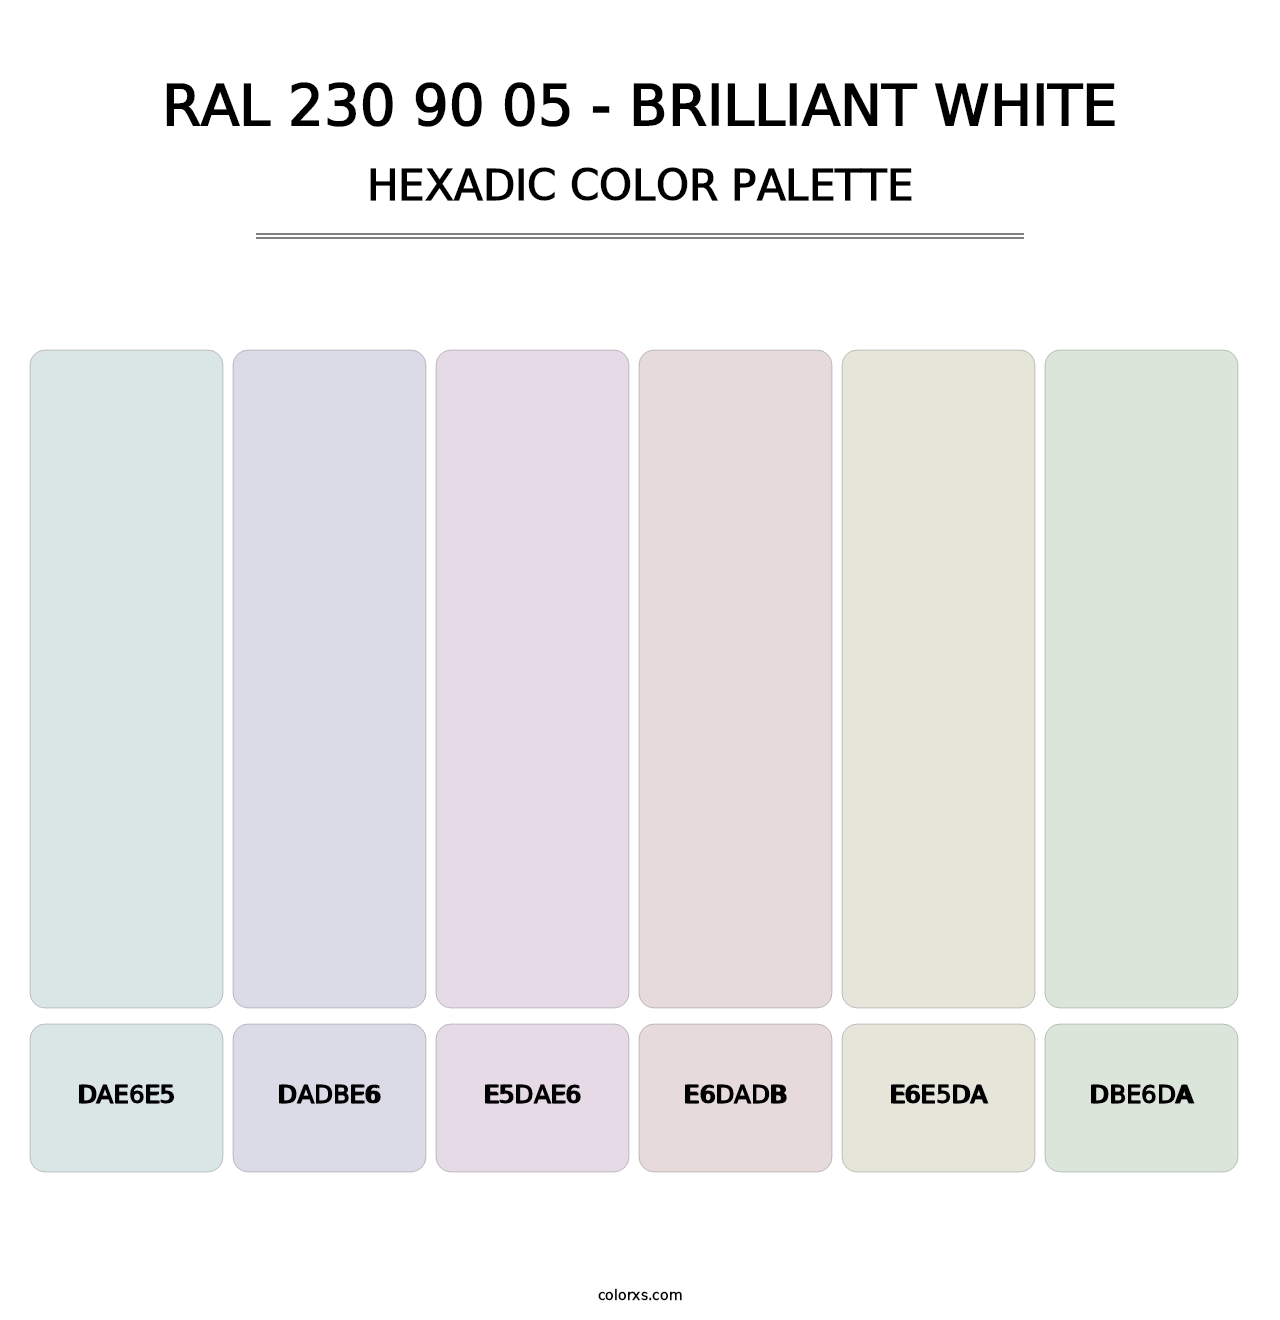 RAL 230 90 05 - Brilliant White - Hexadic Color Palette